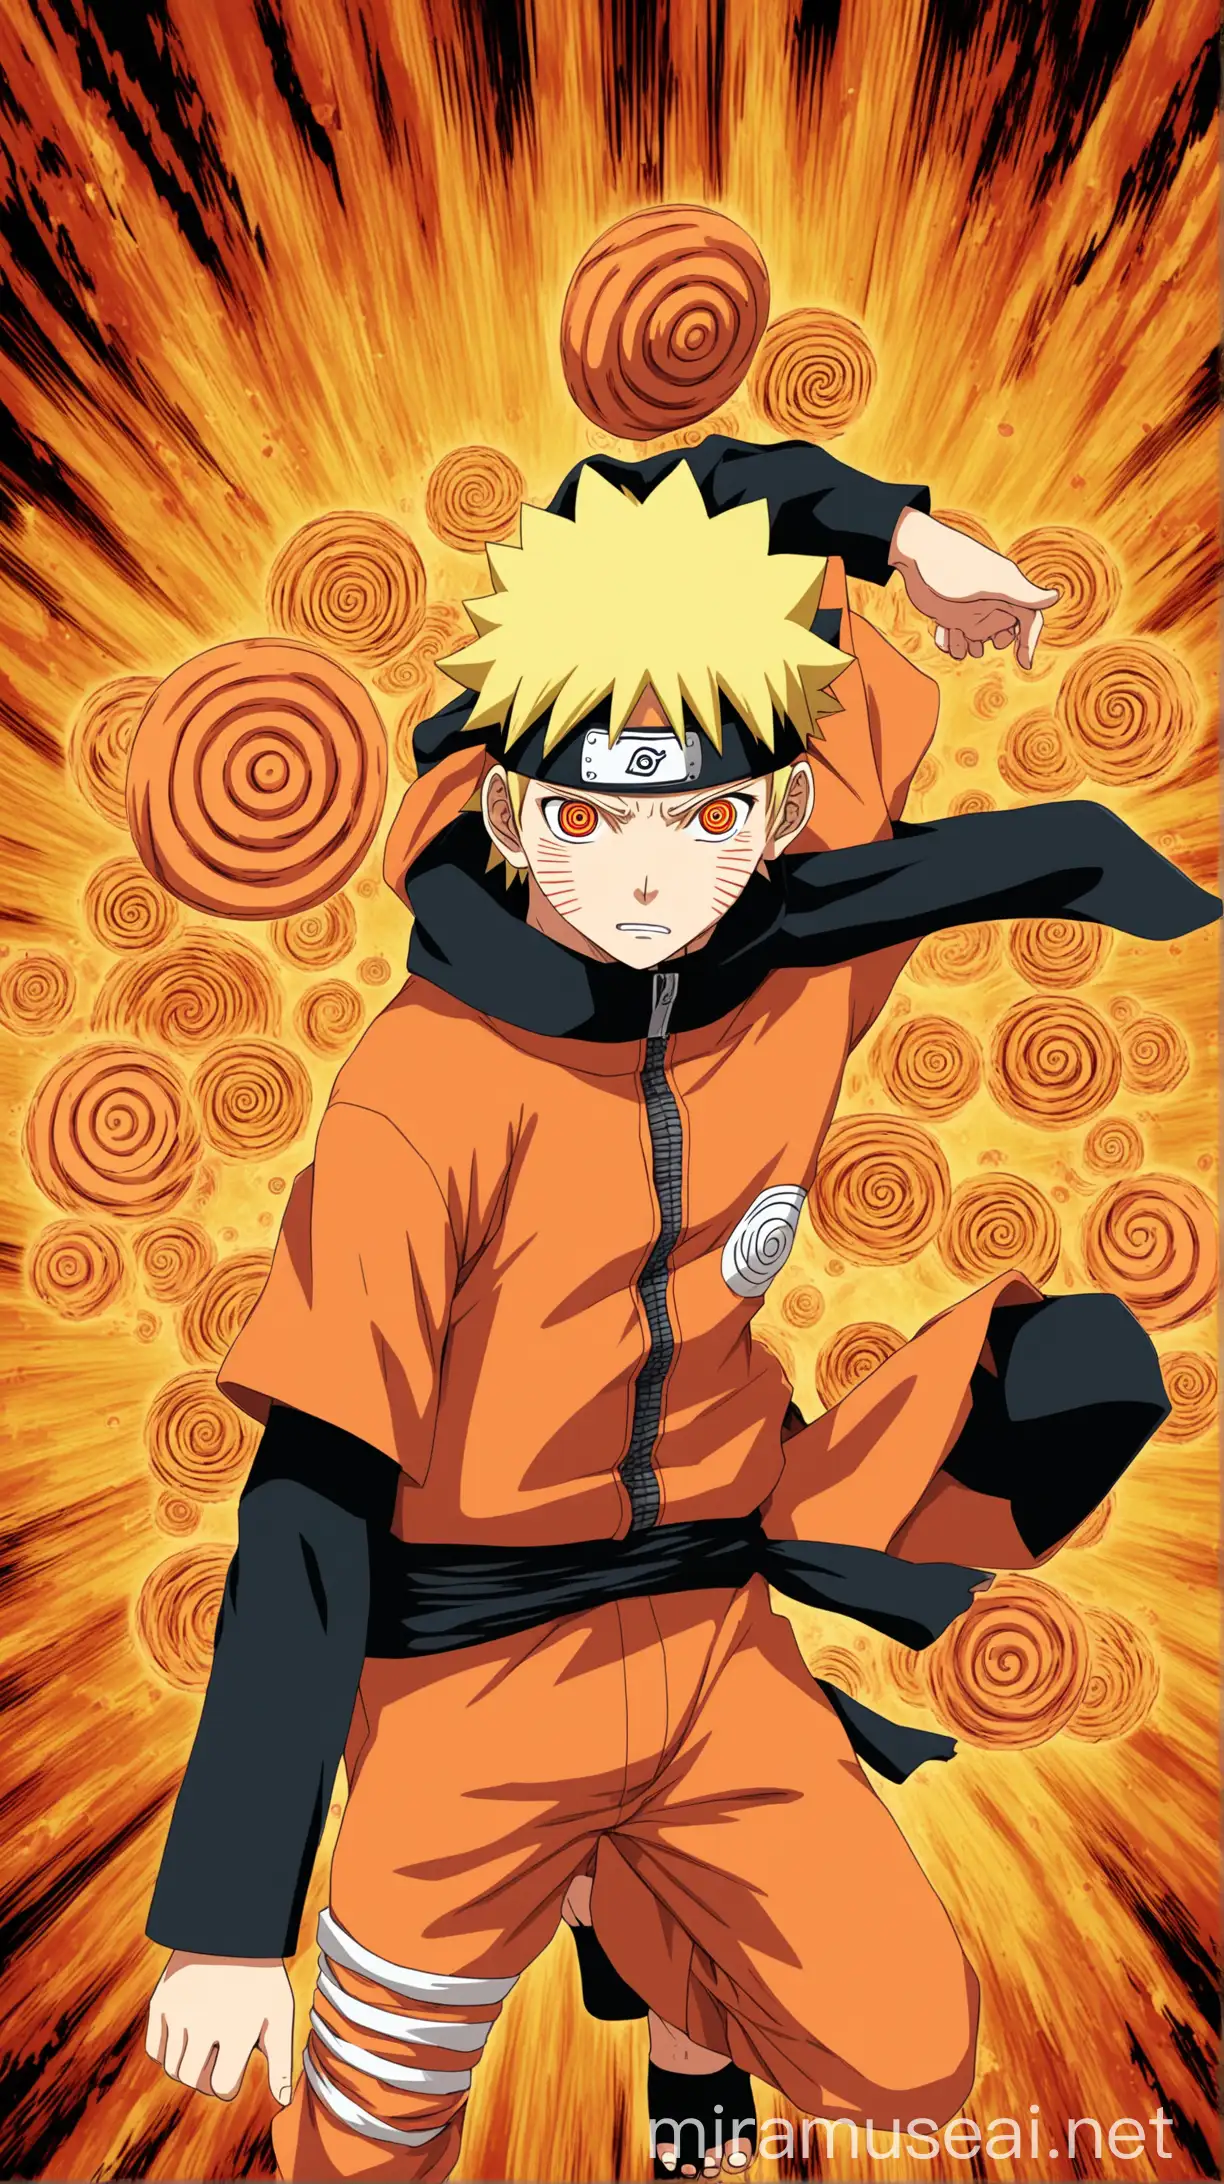 Anime Naruto Uzumaki HD Wallpaper Legendary Ninja in Dynamic Action